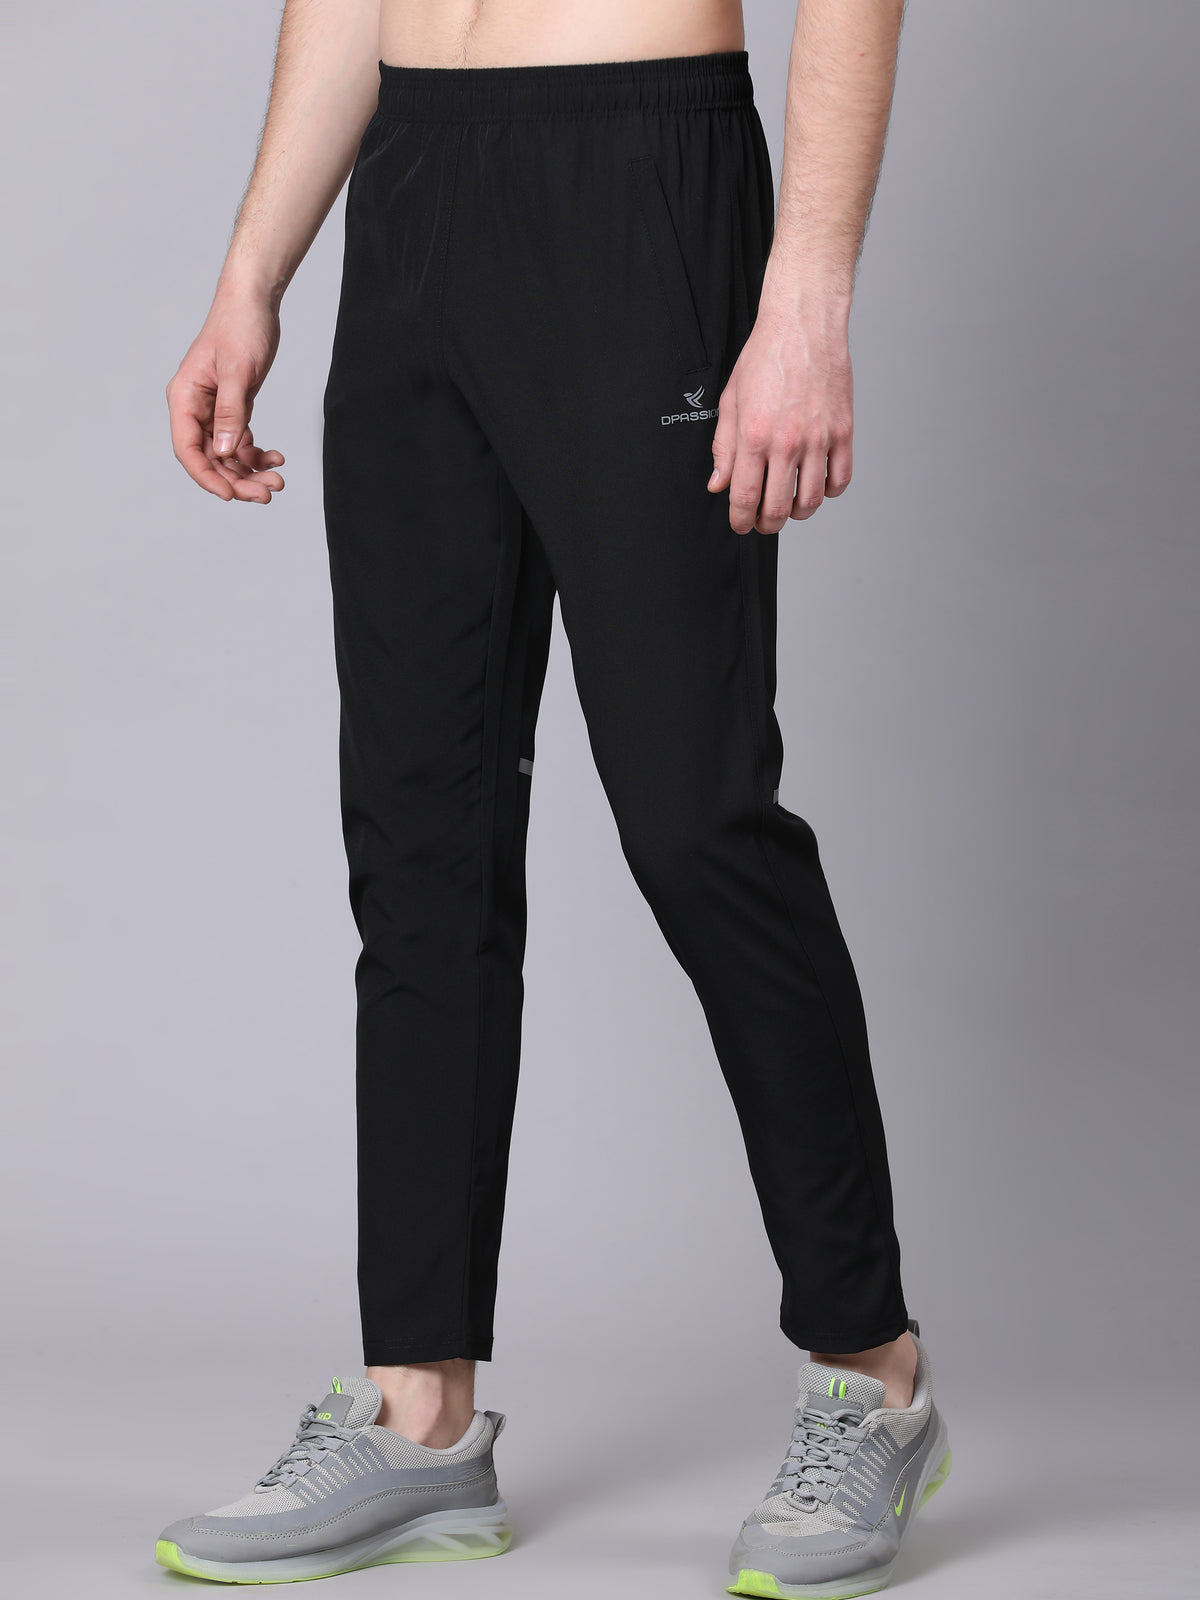 Buy REEBOK Grey Cotton Regular Fit Men's Track Pants